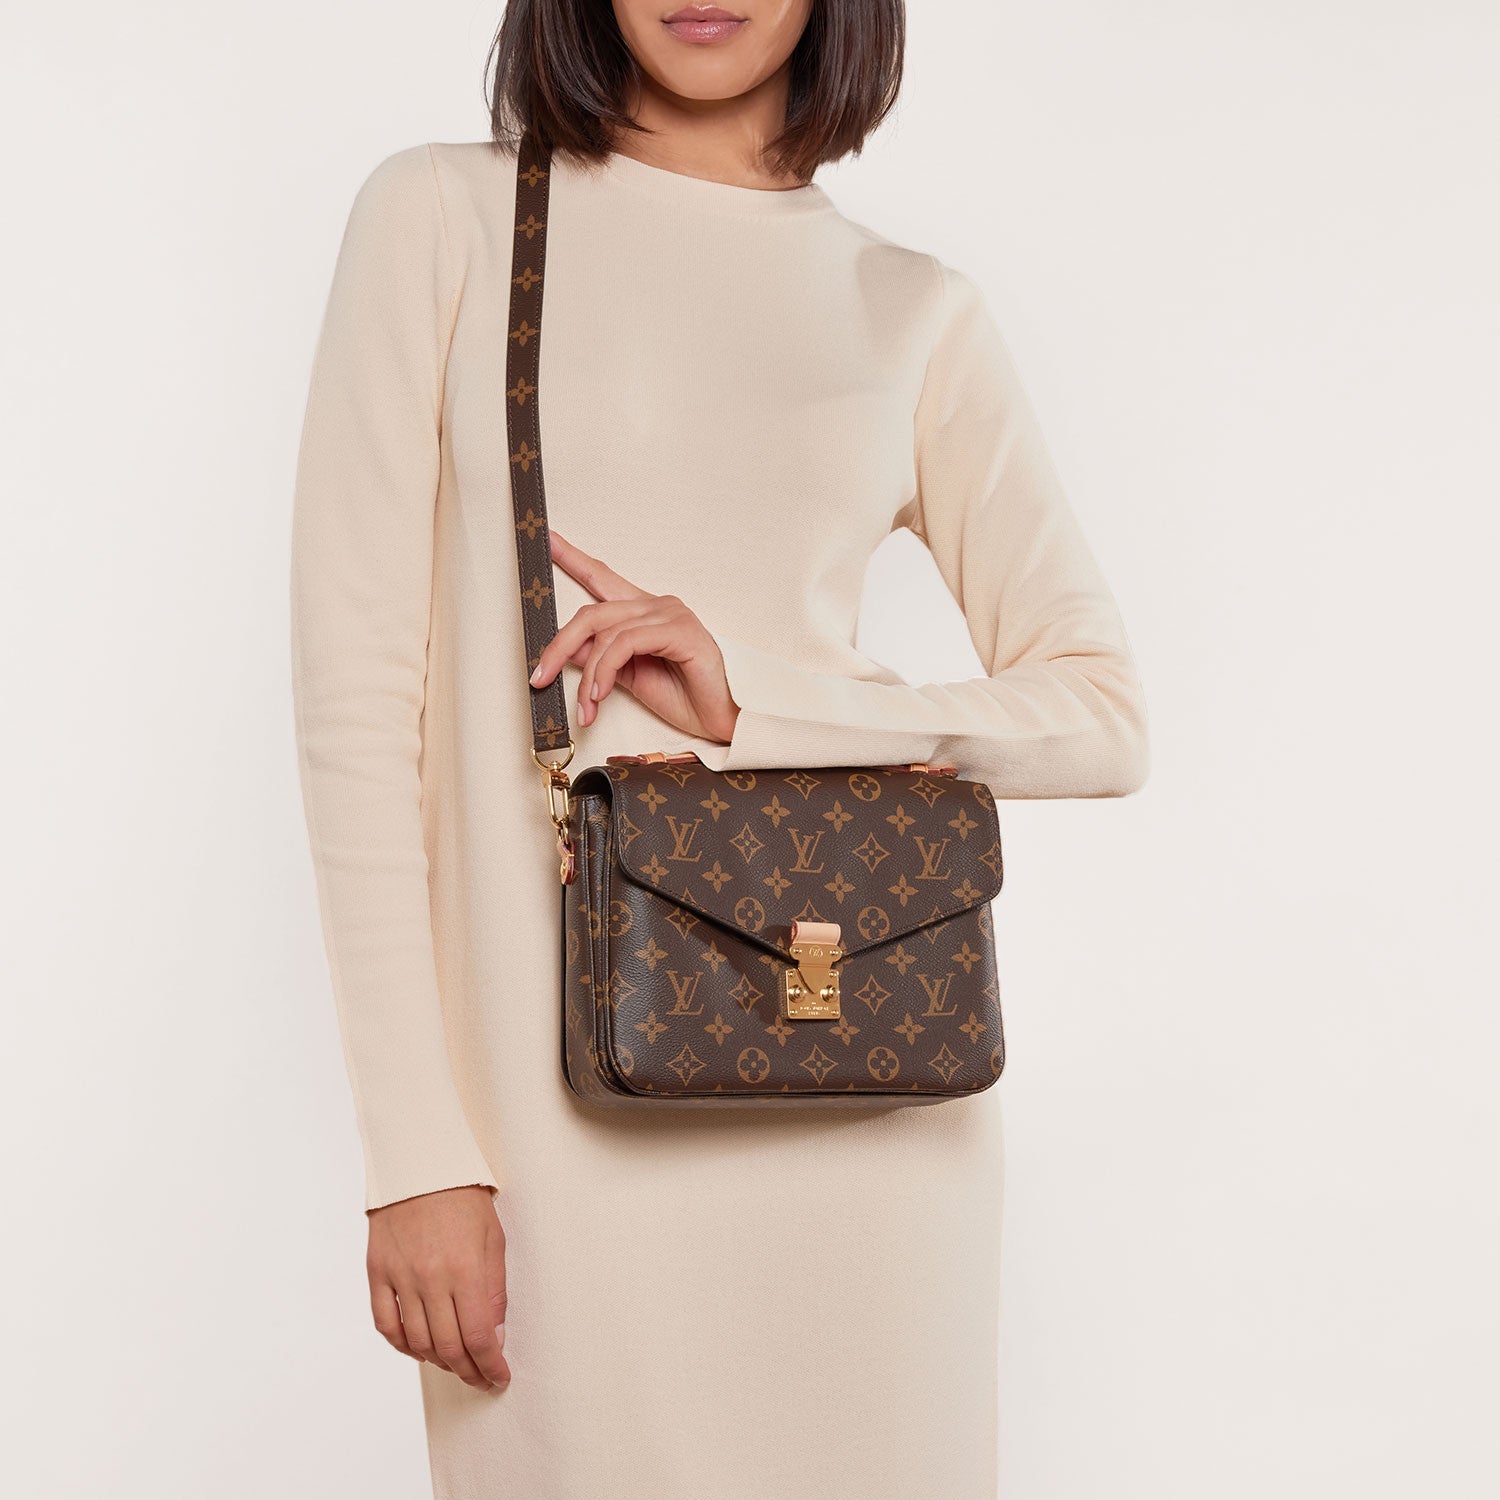 LV Louis Vuitton Pochette Metis messenger bag handbag shoulder bag